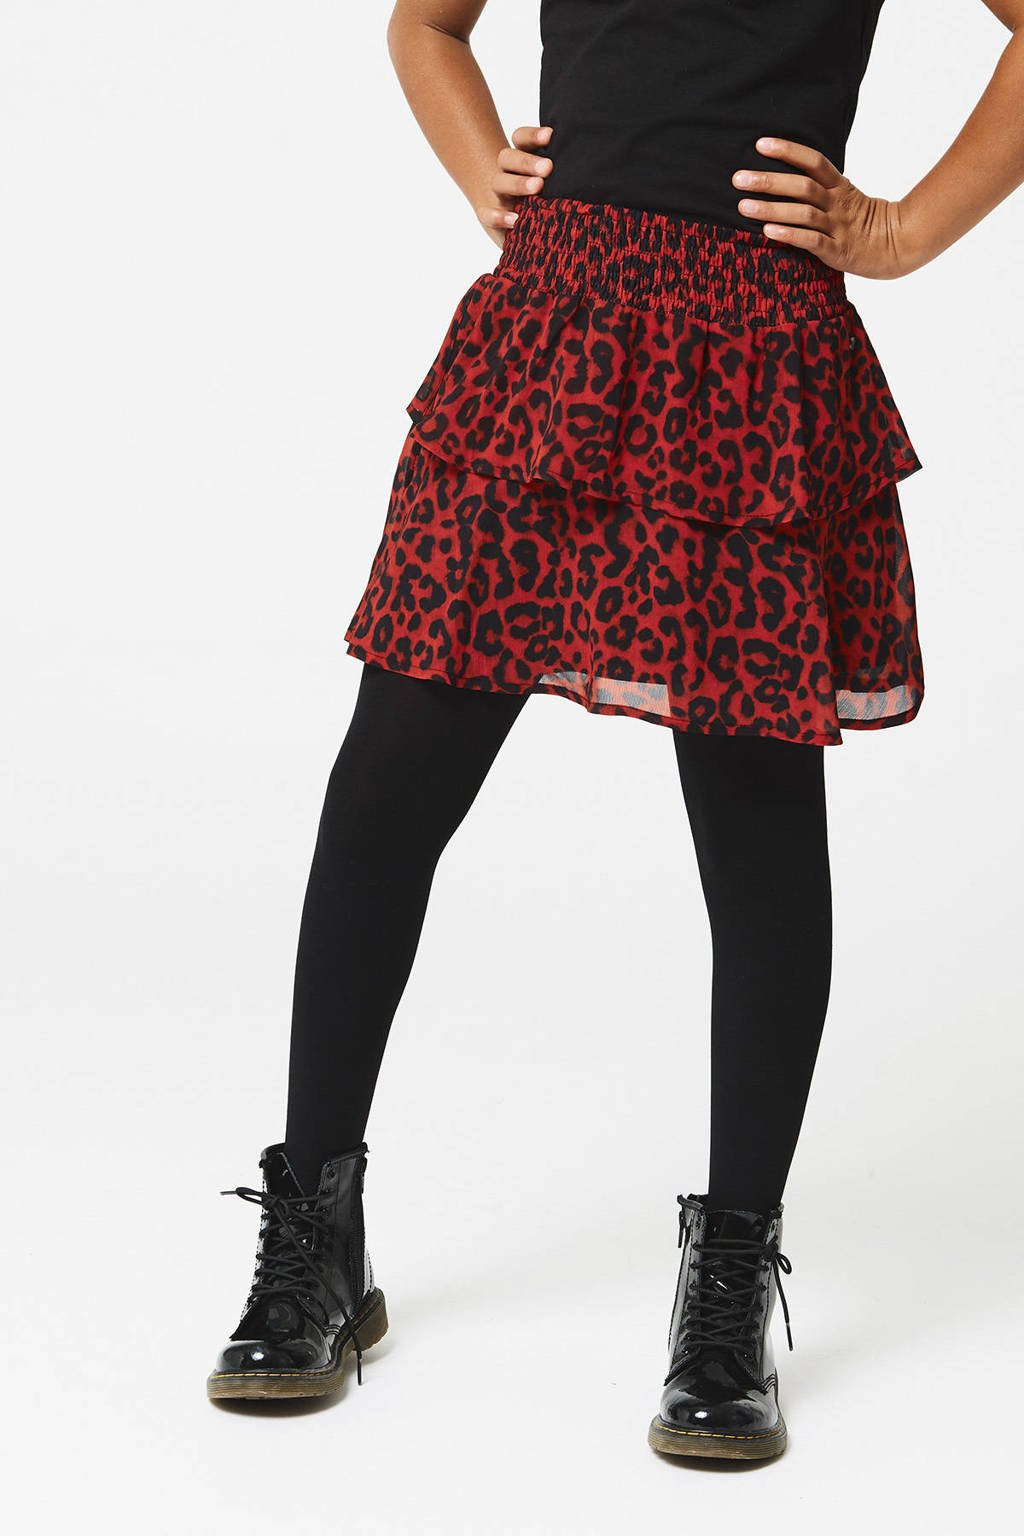 stikstof Autorisatie vitamine CoolCat Junior rok Ruby met panterprint rood/zwart | kleertjes.com